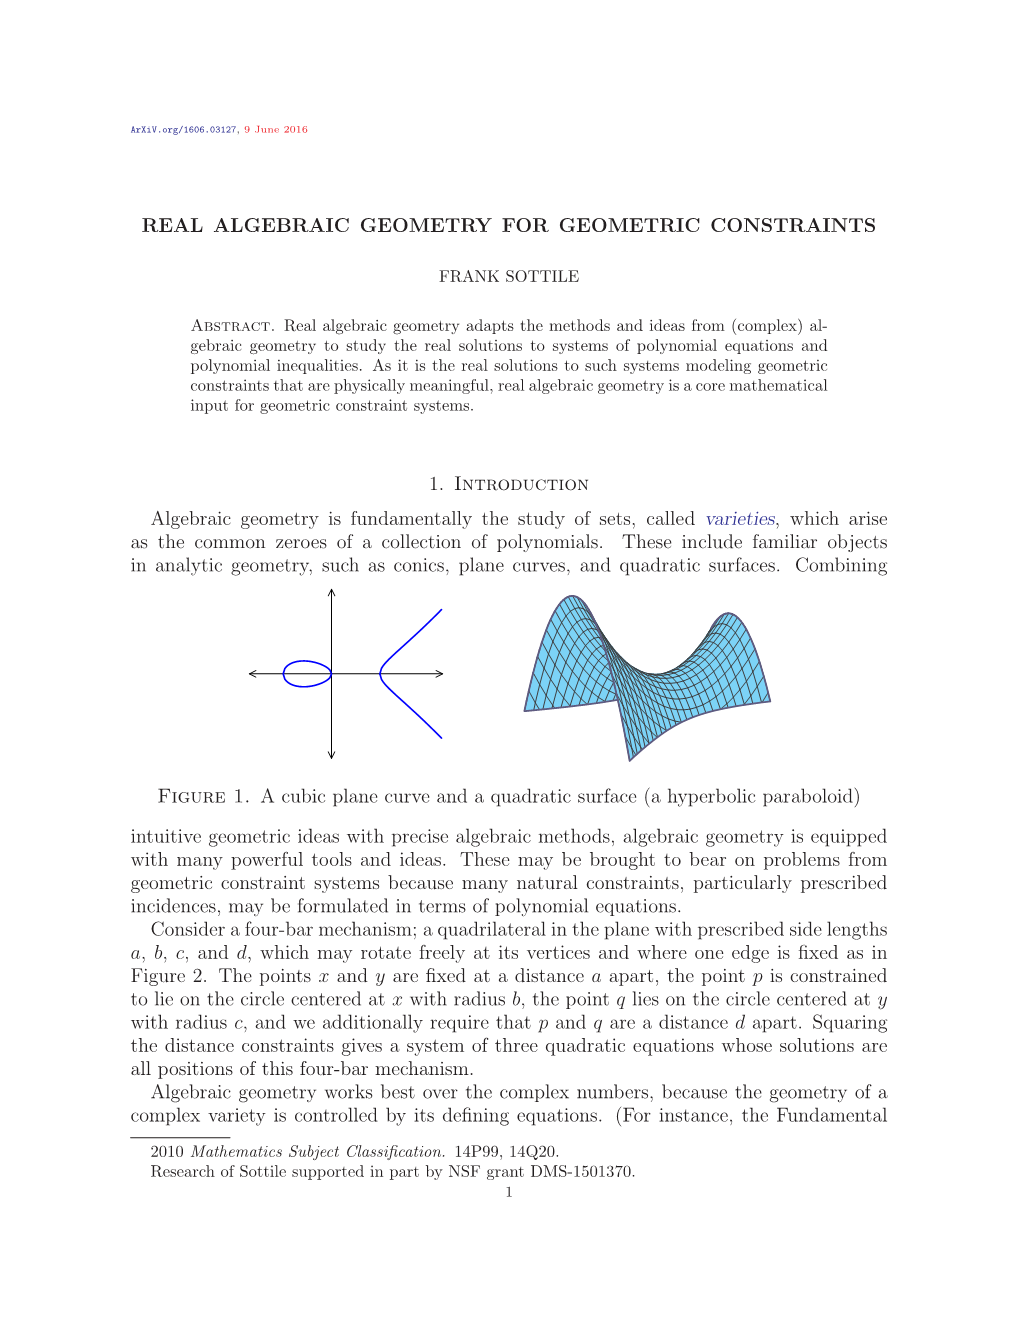 Real Algebraic Geometry for Geometric Constraints 11